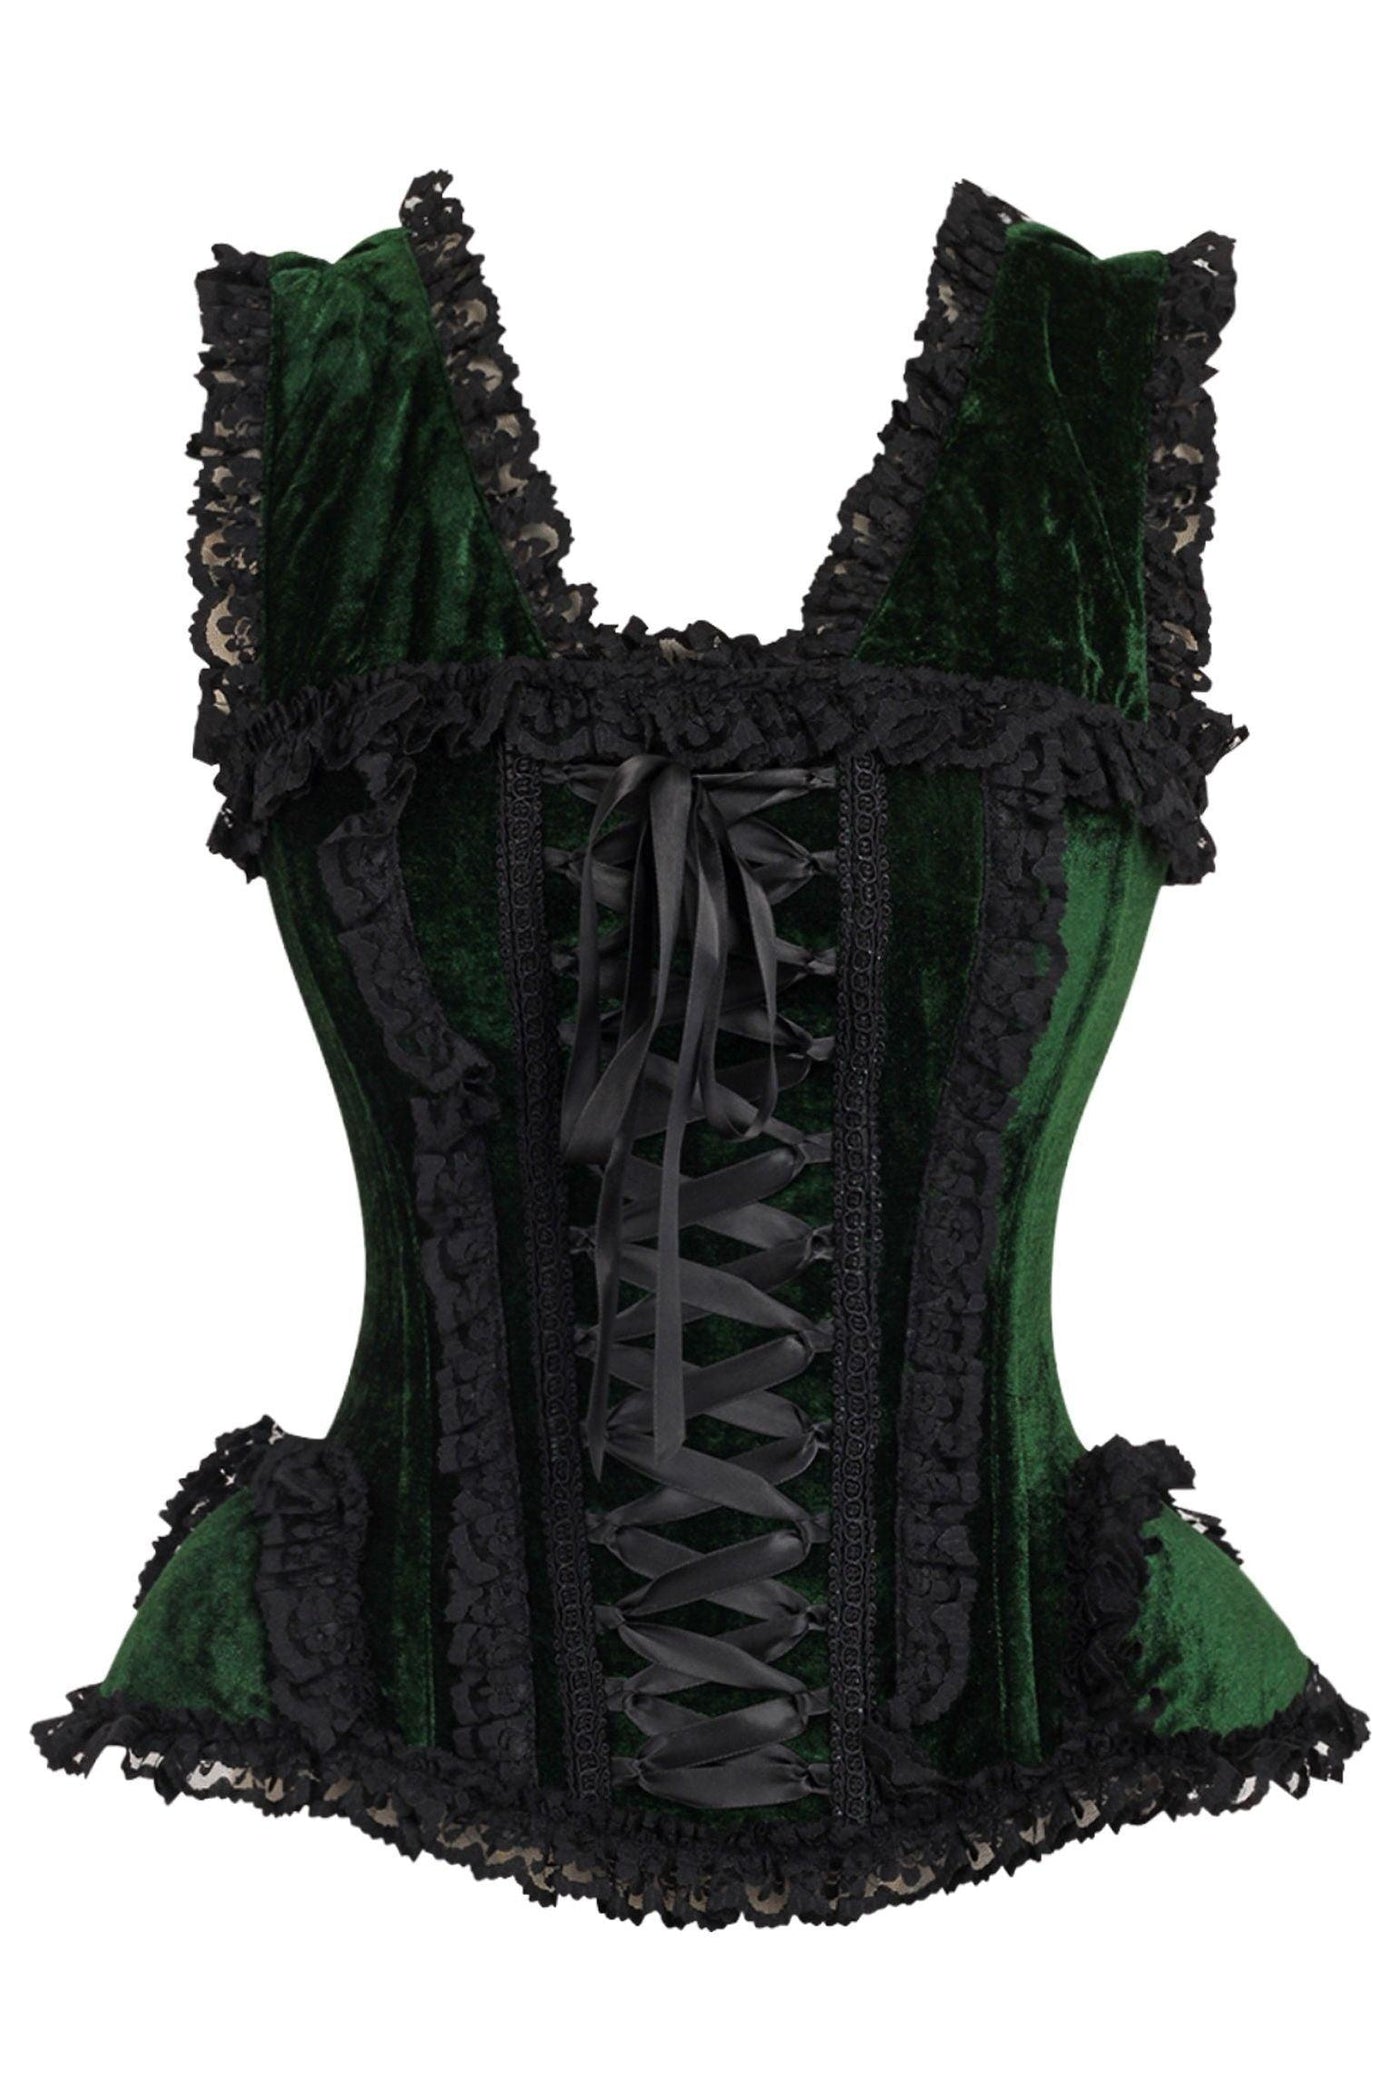 Top Drawer Dark Green Velvet & Lace Steel Boned Corset w/Cap Sleeves - AMIClubwear